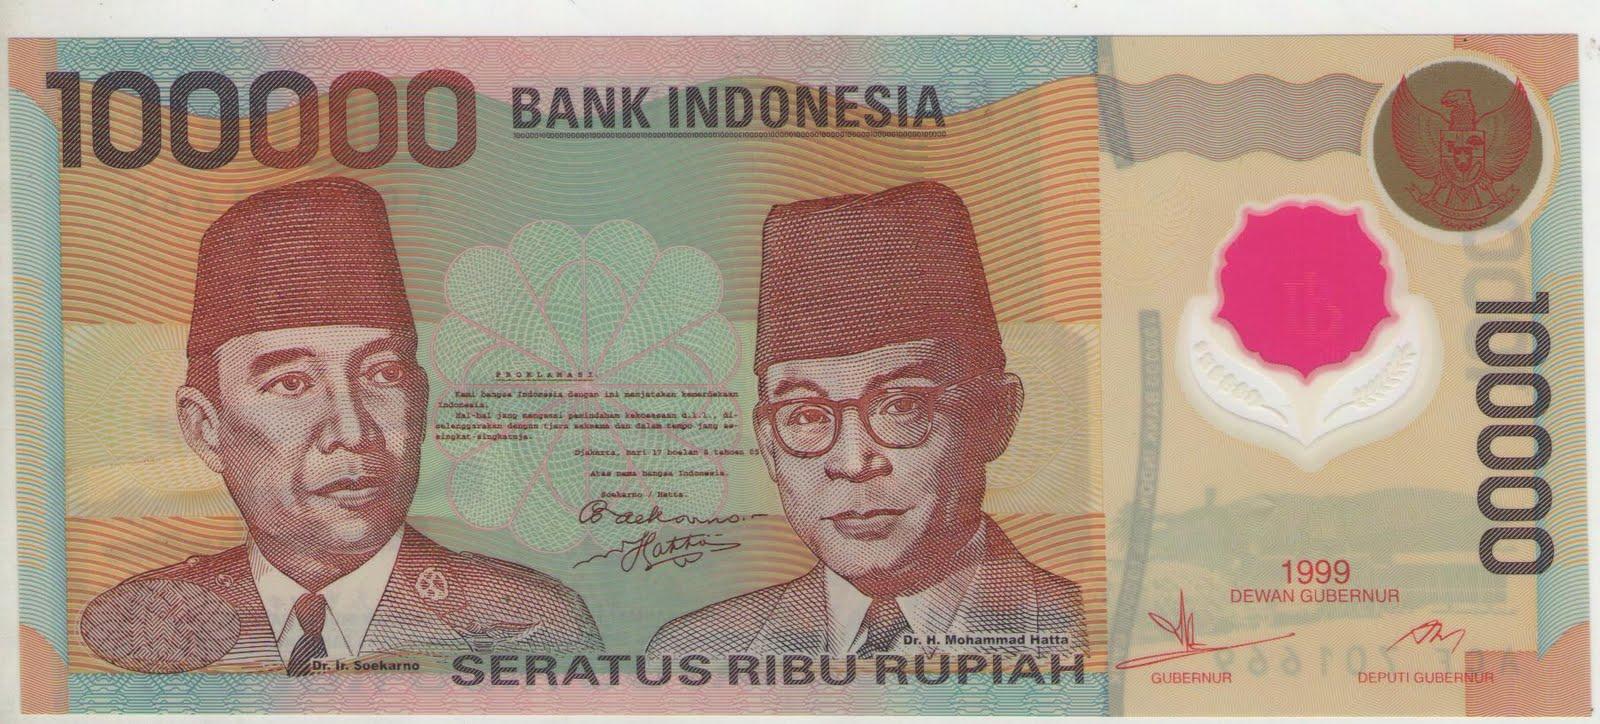 Foto Sukarno dalam mata uang resmi Indonesia. Copyright: tokouangkuno.com